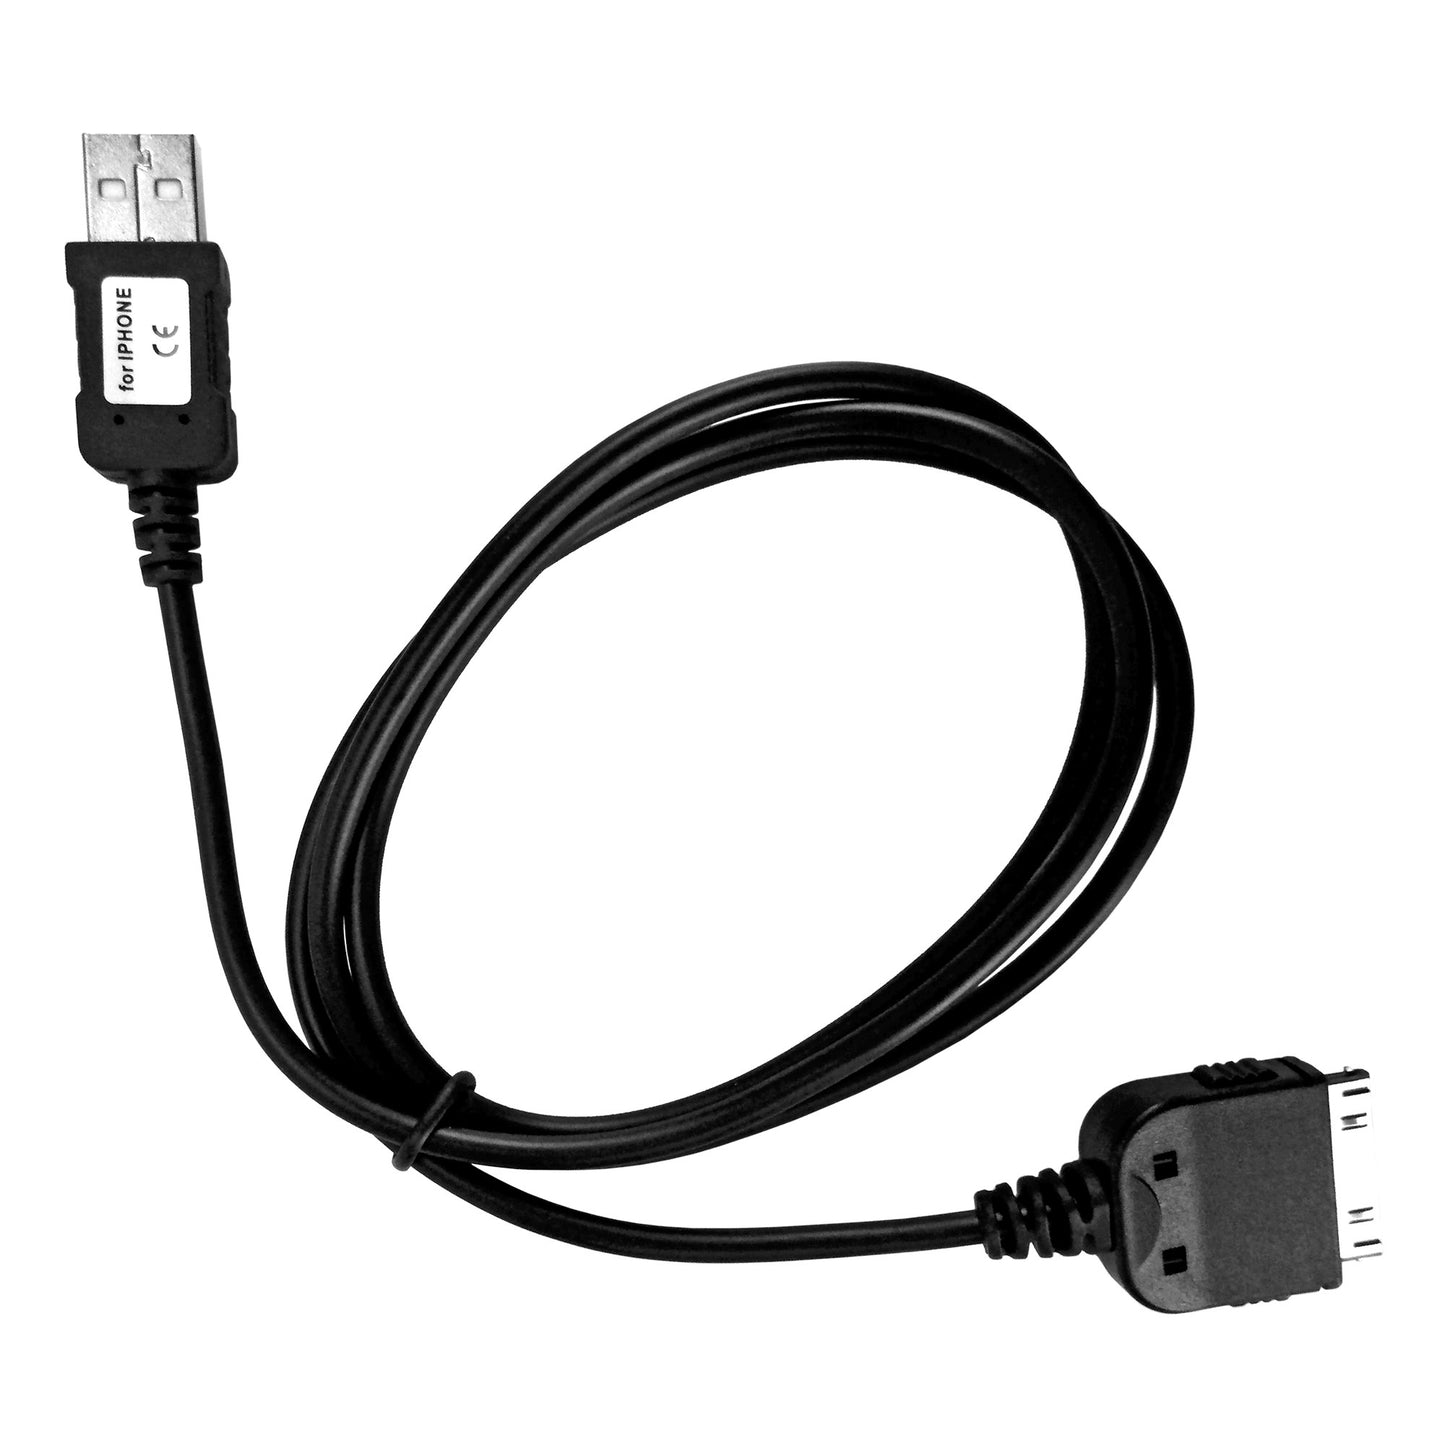 USB Datenkabel Ladekabel für iPhone 2 iPhone 3G/3GS iPhone 4/4S iPod